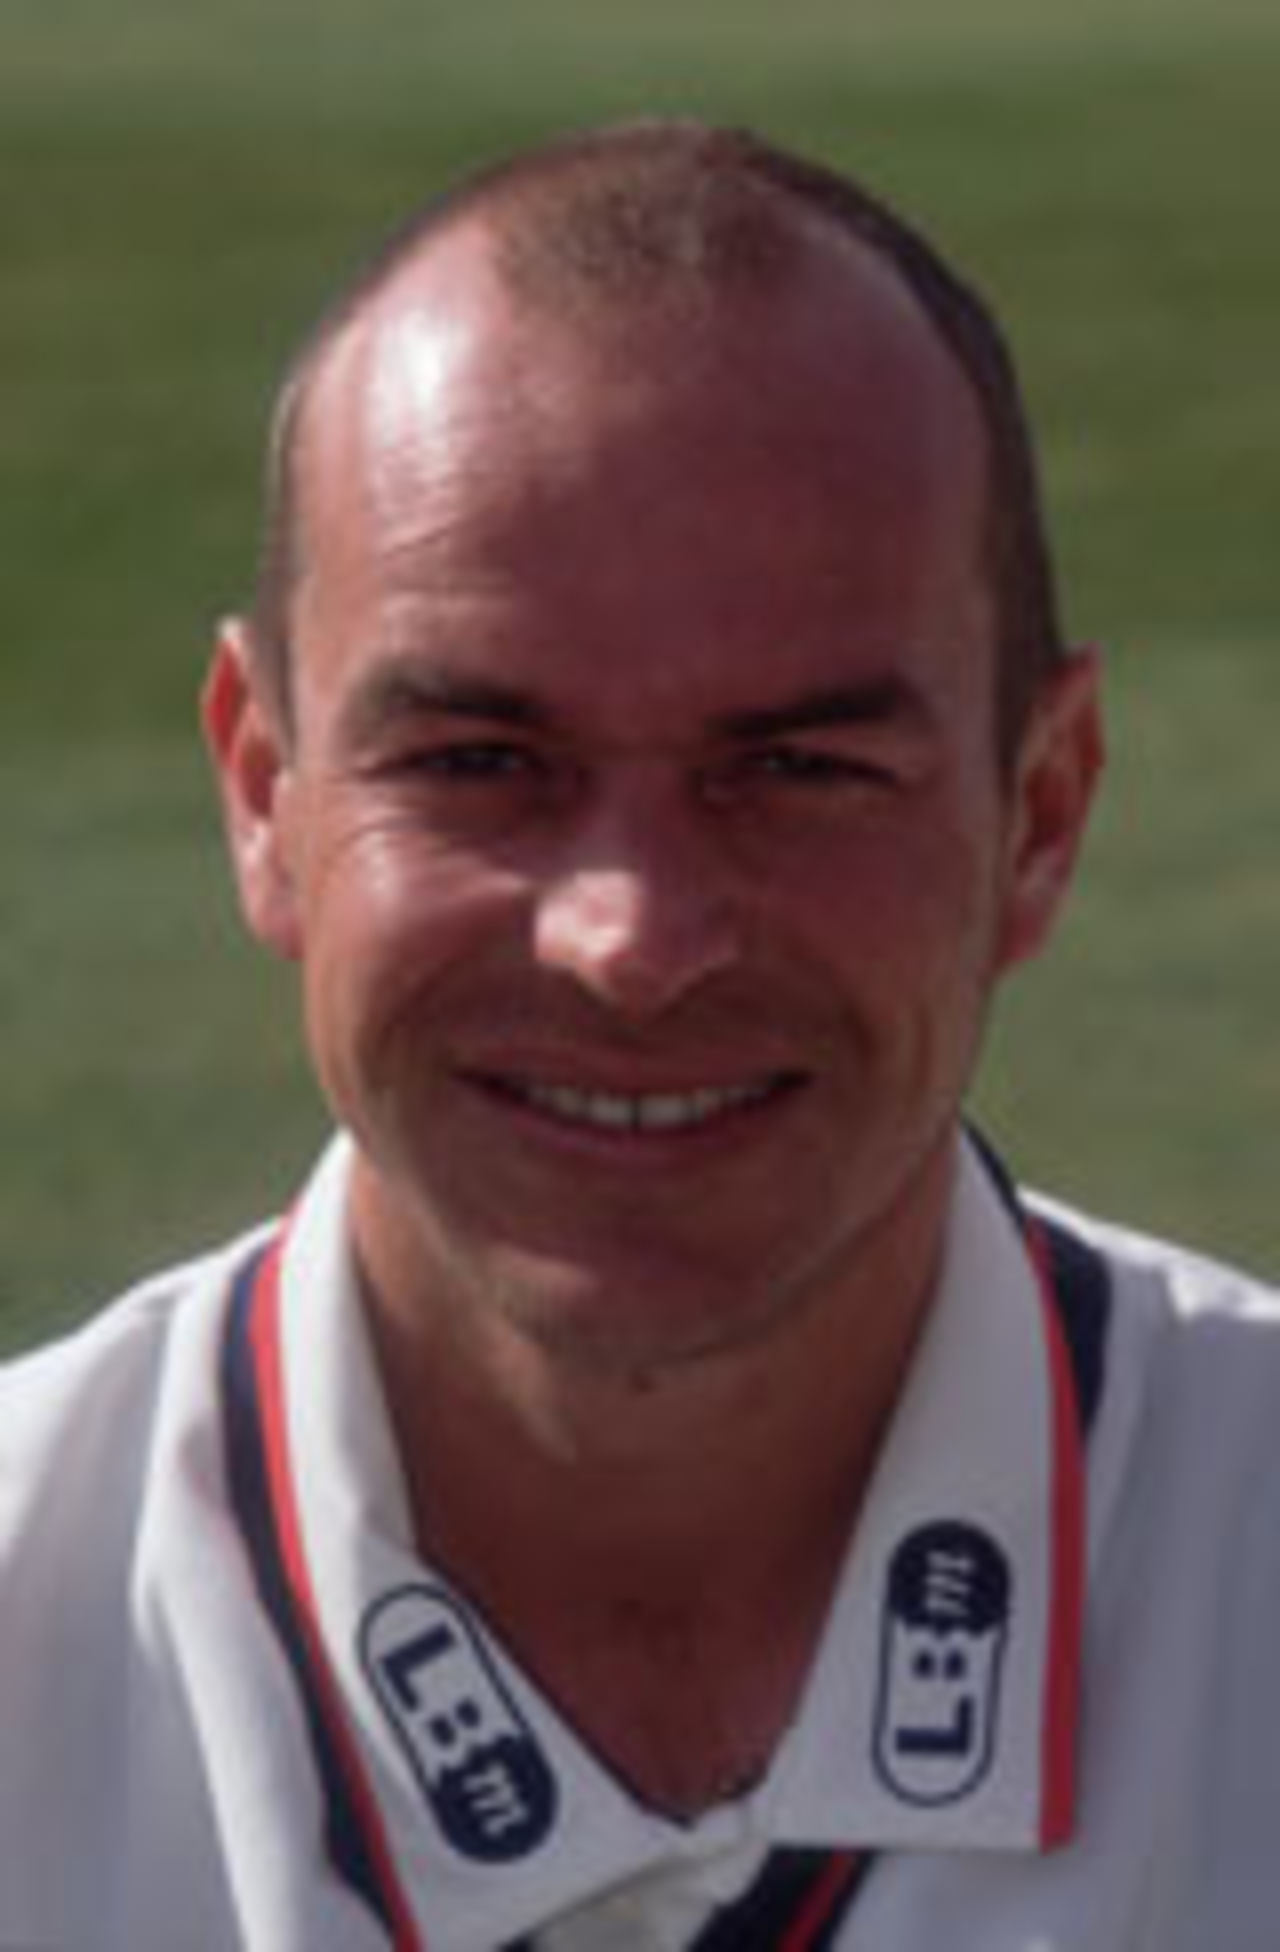 Graham Lloyd in Lancashire kit, April 18 2001